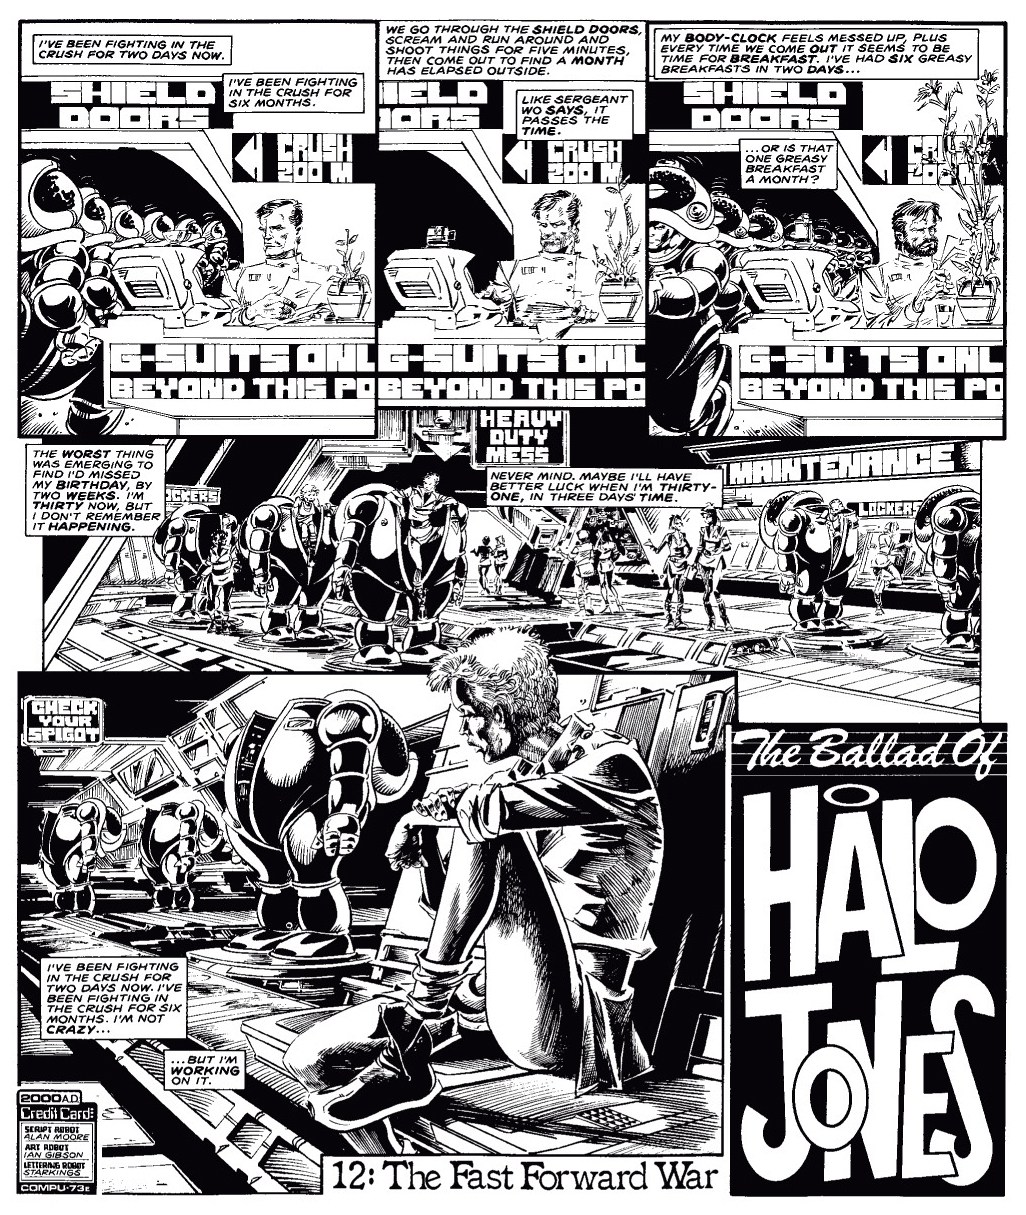 High Resolution Wallpaper | The Ballad Of Halo Jones 1026x1215 px